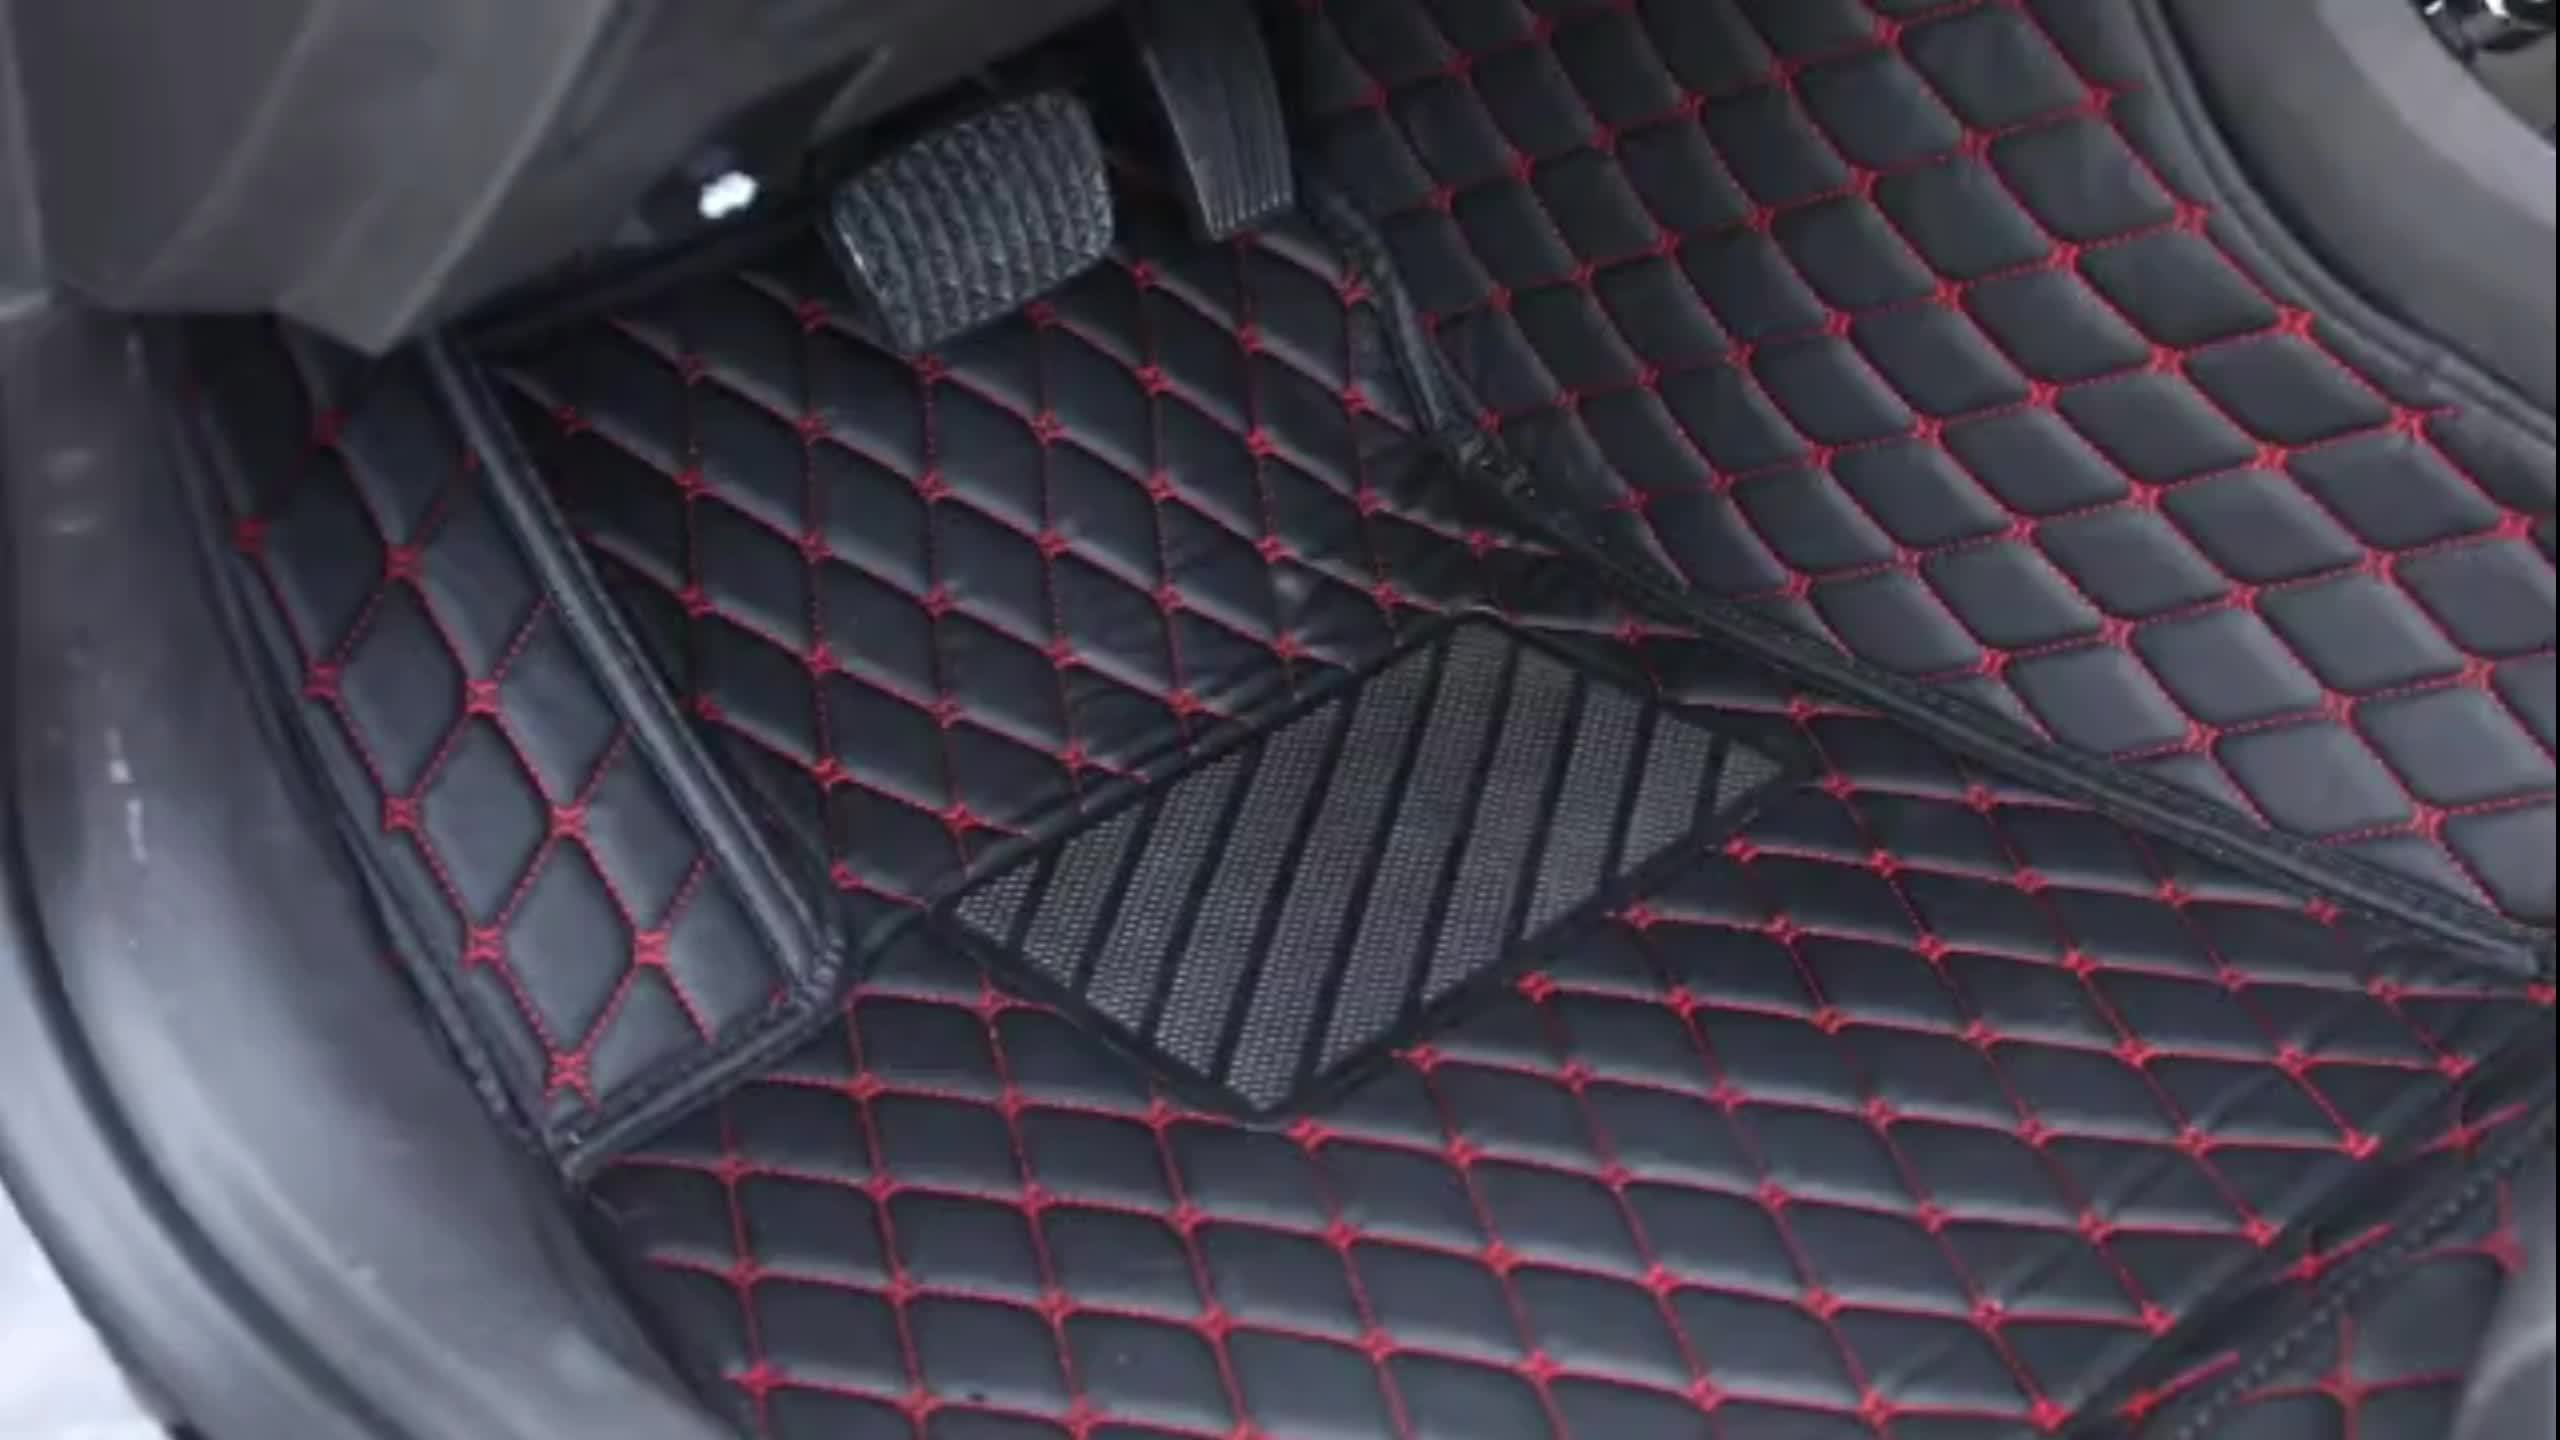 Car Floor Mats Mg4 Mulan 2022 Auto Interior Accessories Pu - Temu